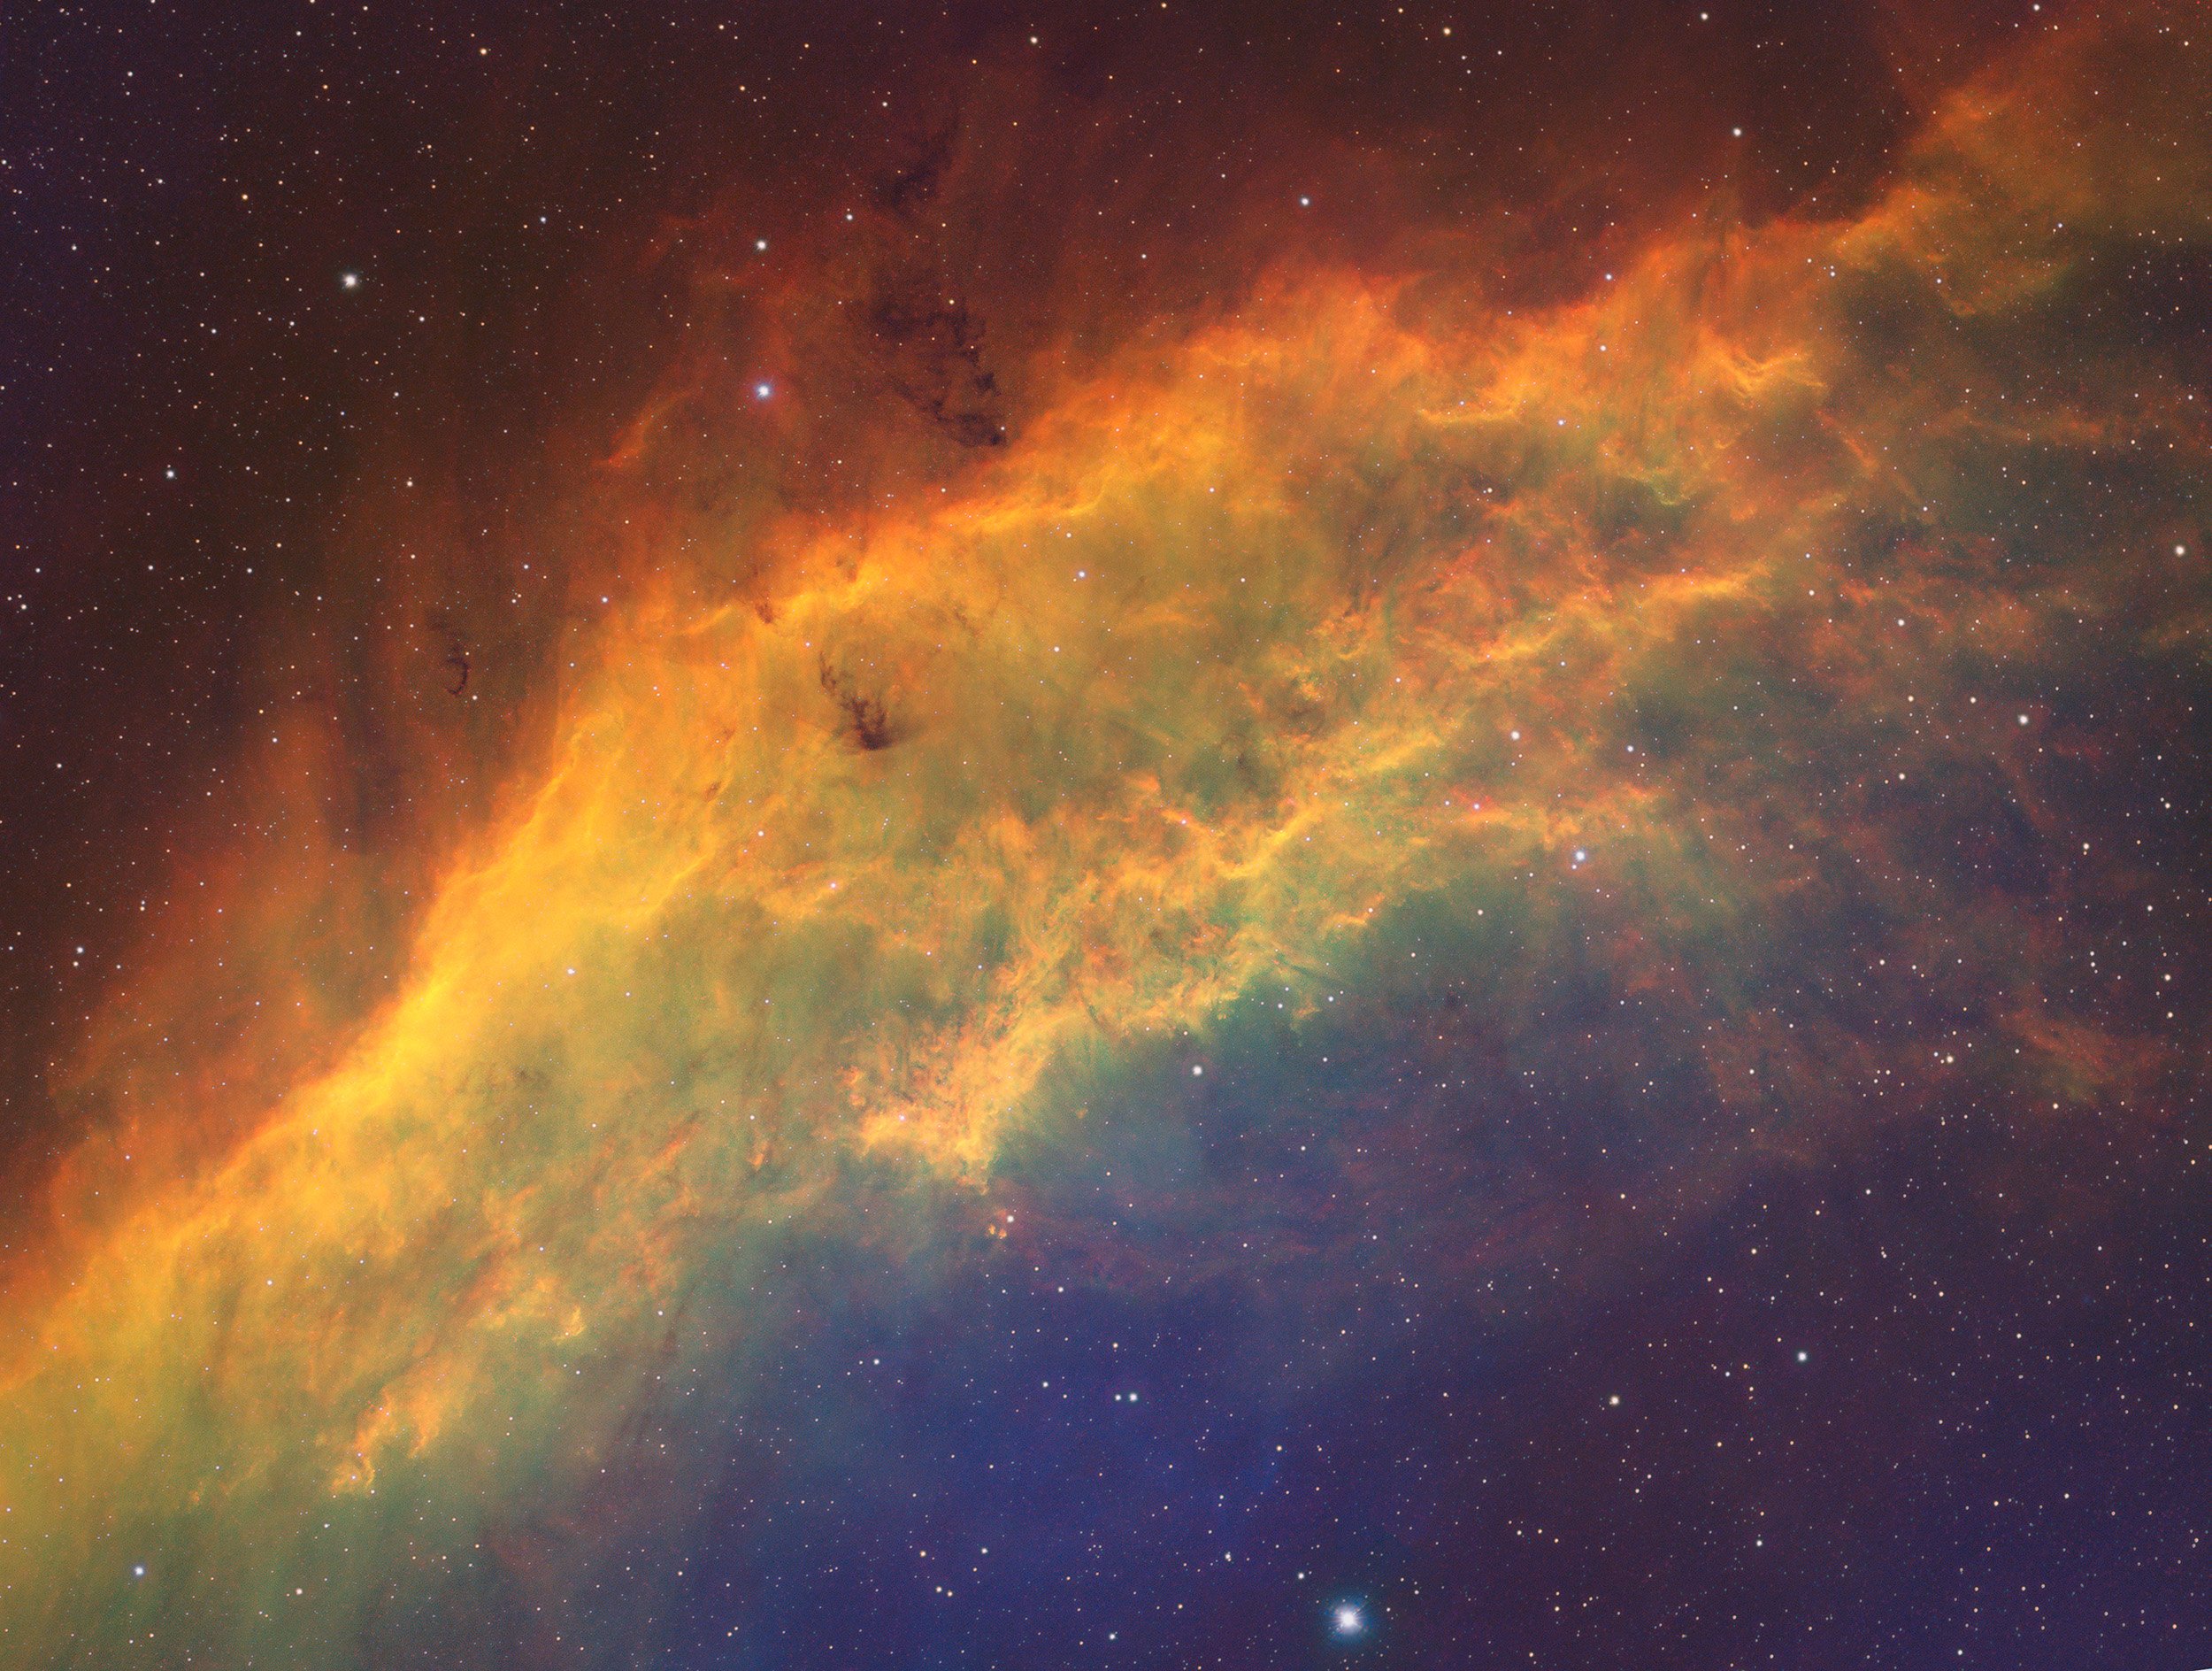 California Nebula NGC 1499 in Sulfur II, Hydrogen alpha, and Oxygen III palette